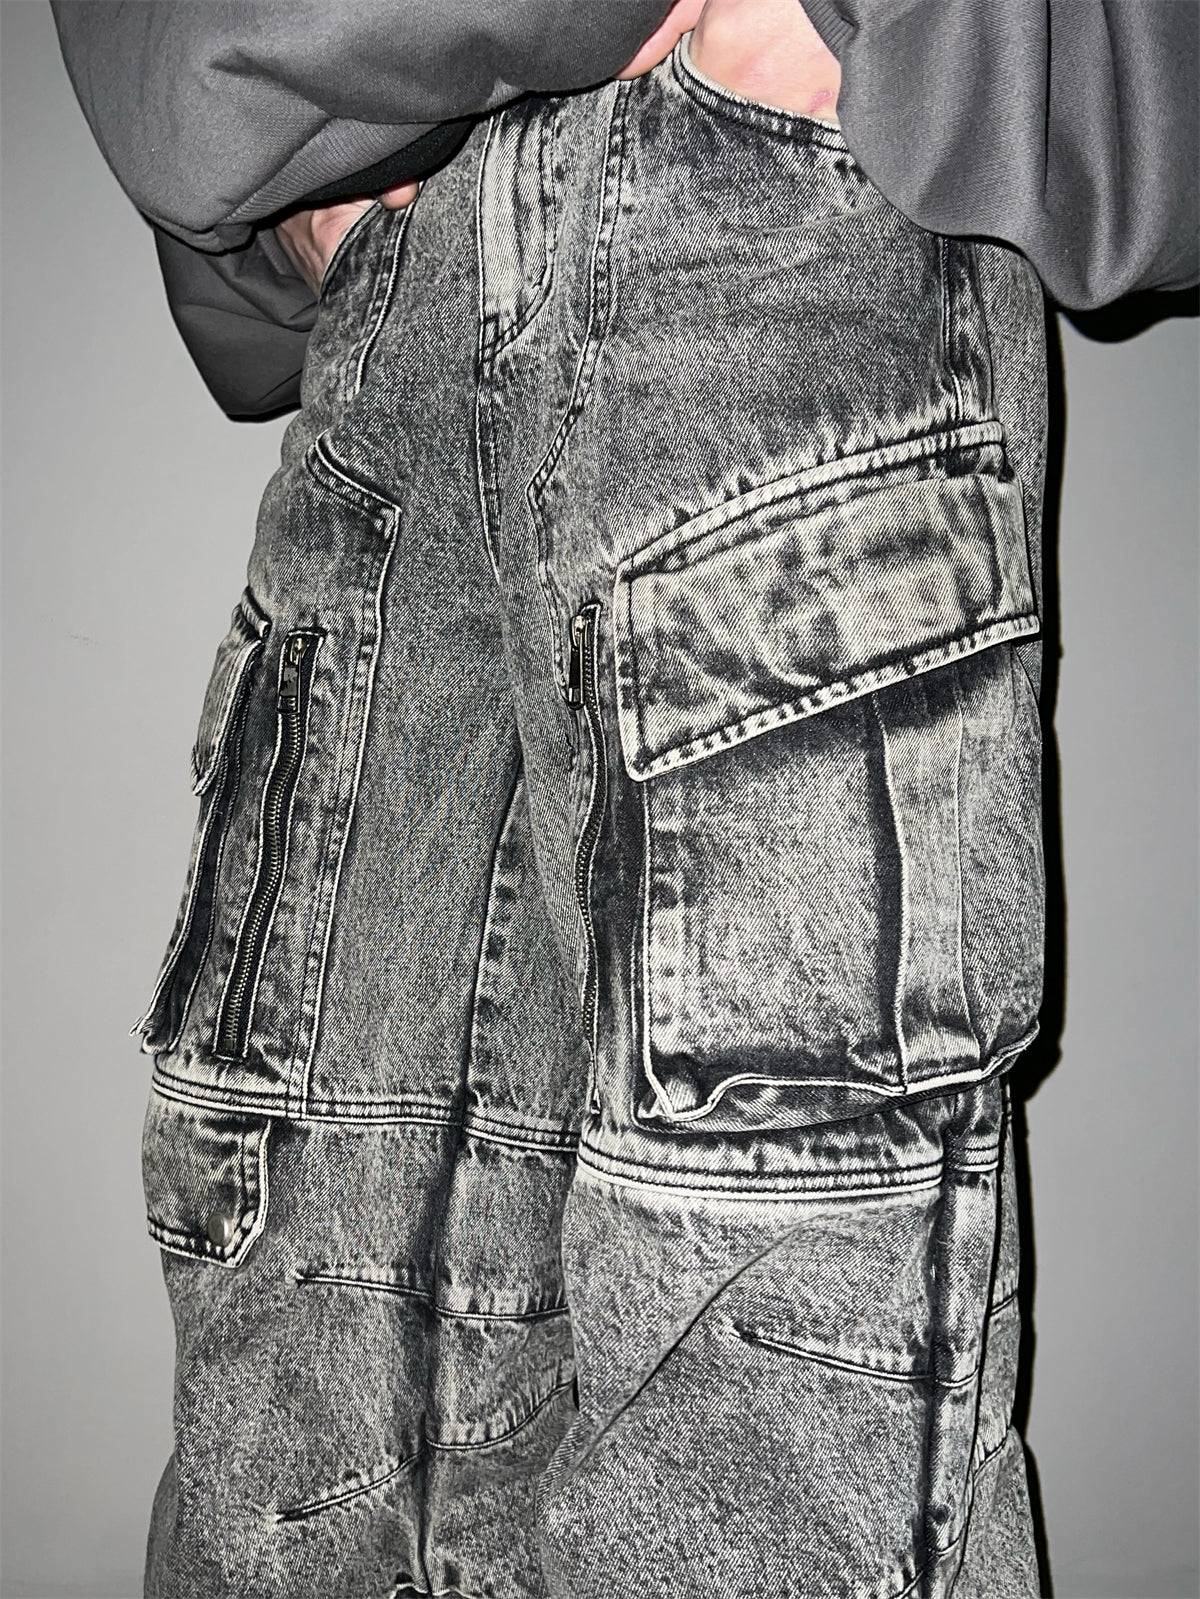 Work Style Multi-pocket Jeans